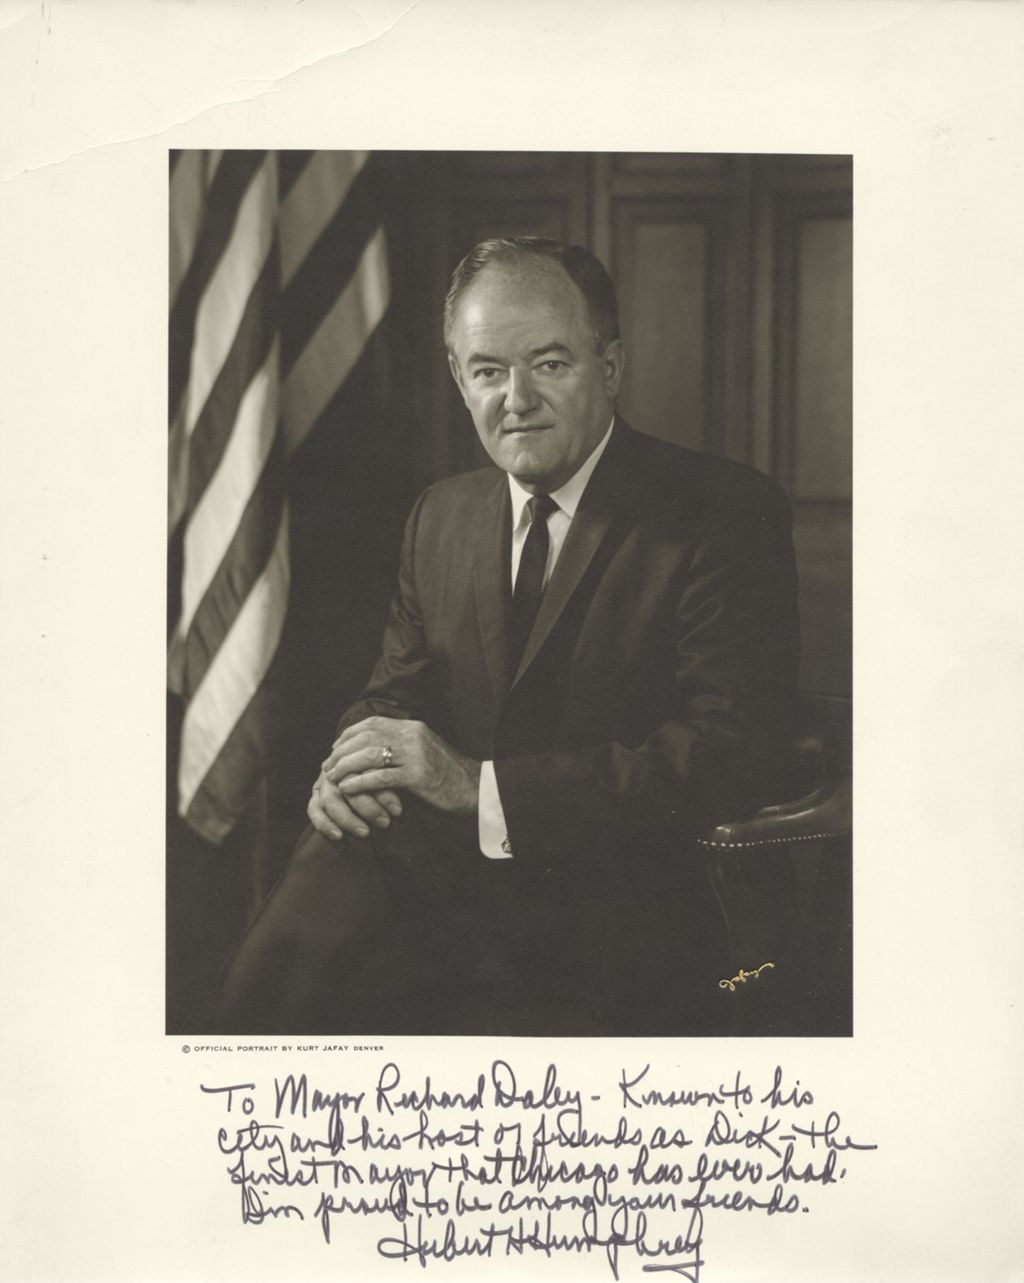 Autographed portrait of Hubert Humphrey